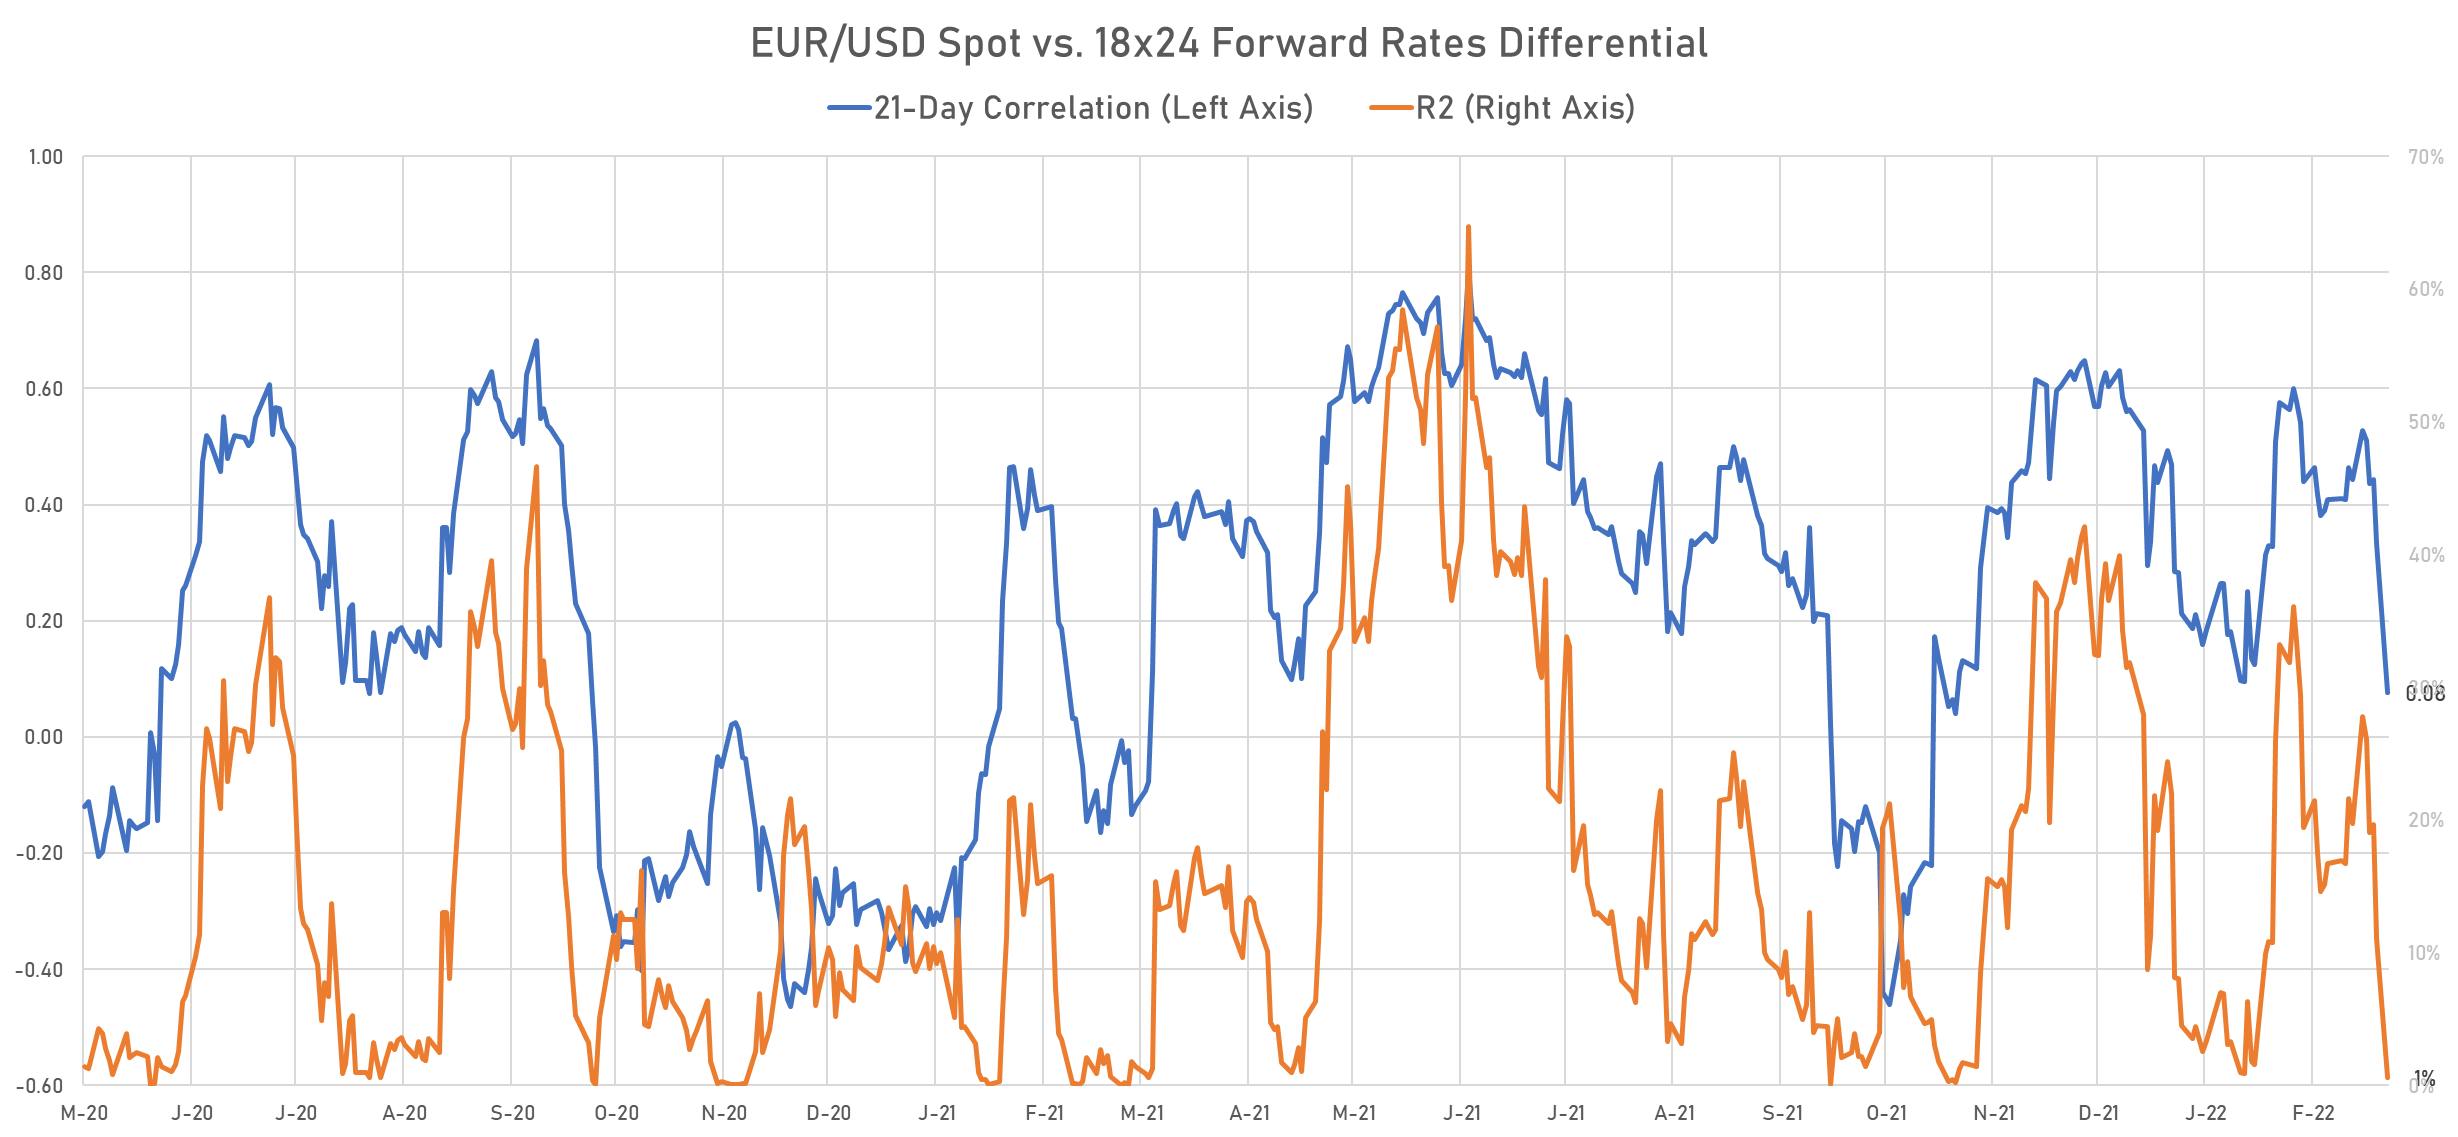 Euro spot vs rates differentials | Sources: phipost.com, Refinitiv data